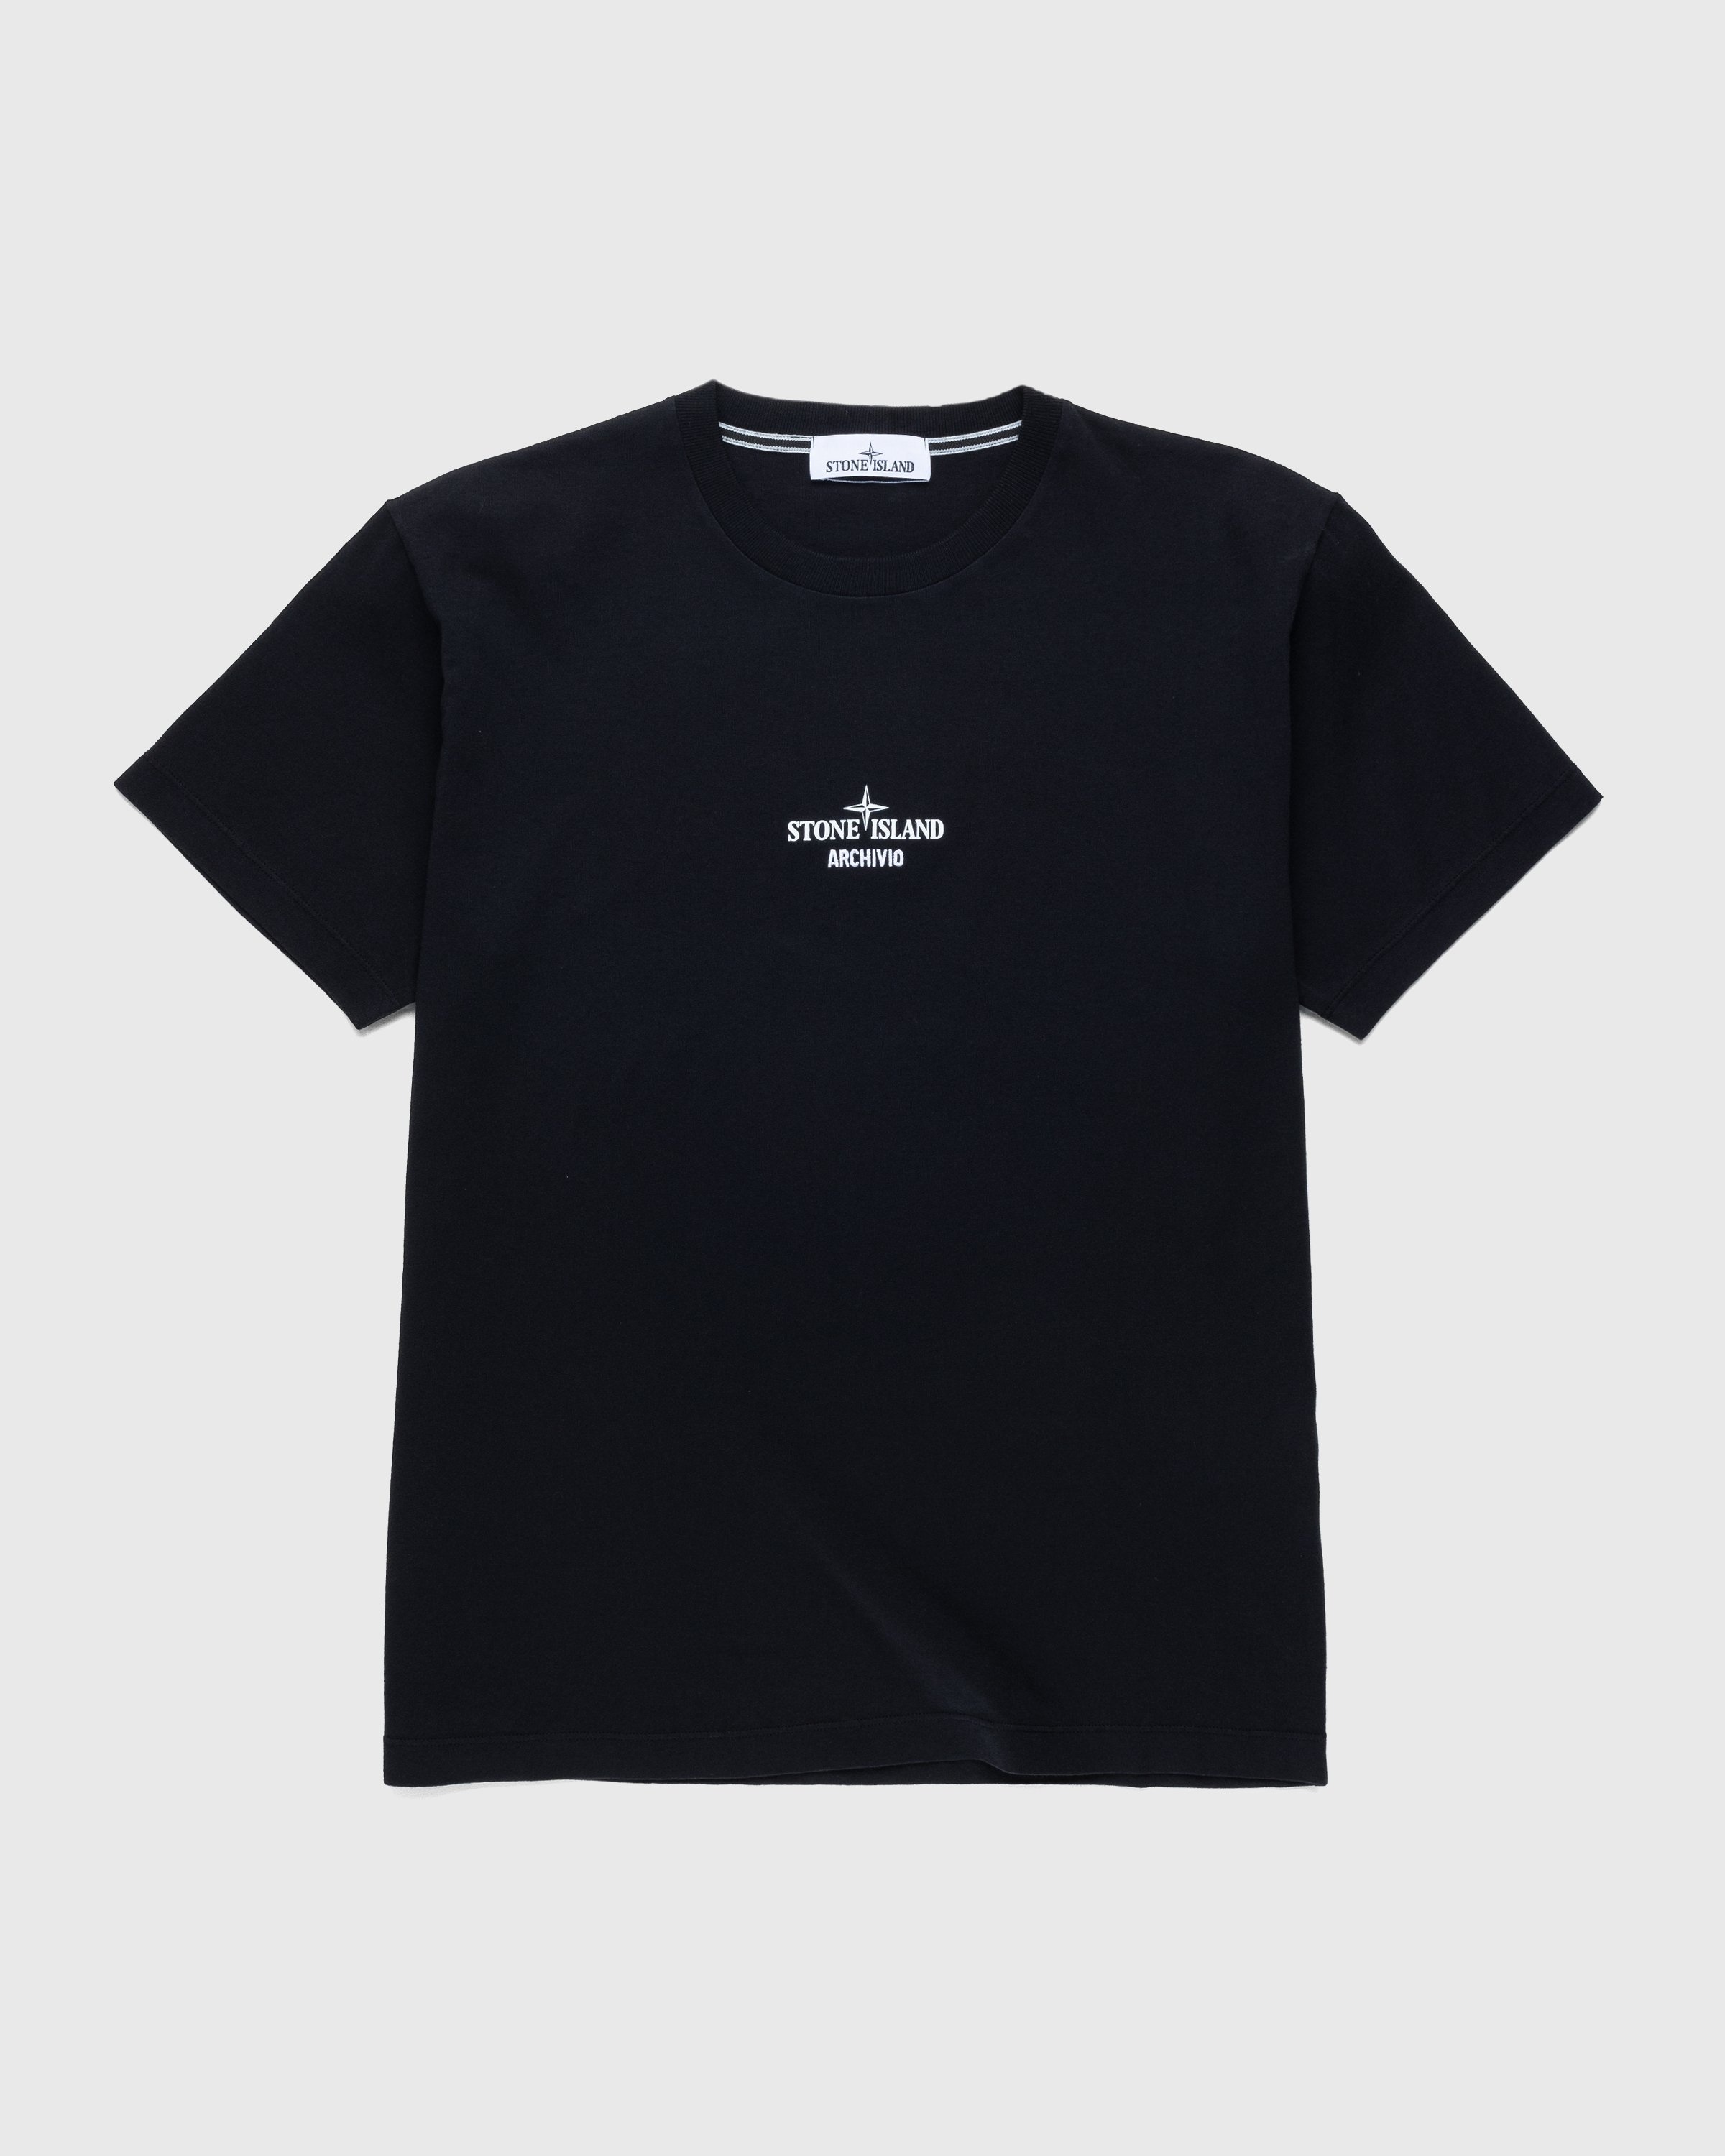 Stone Island – Archivio T-Shirt Black - T-Shirts - Black - Image 1